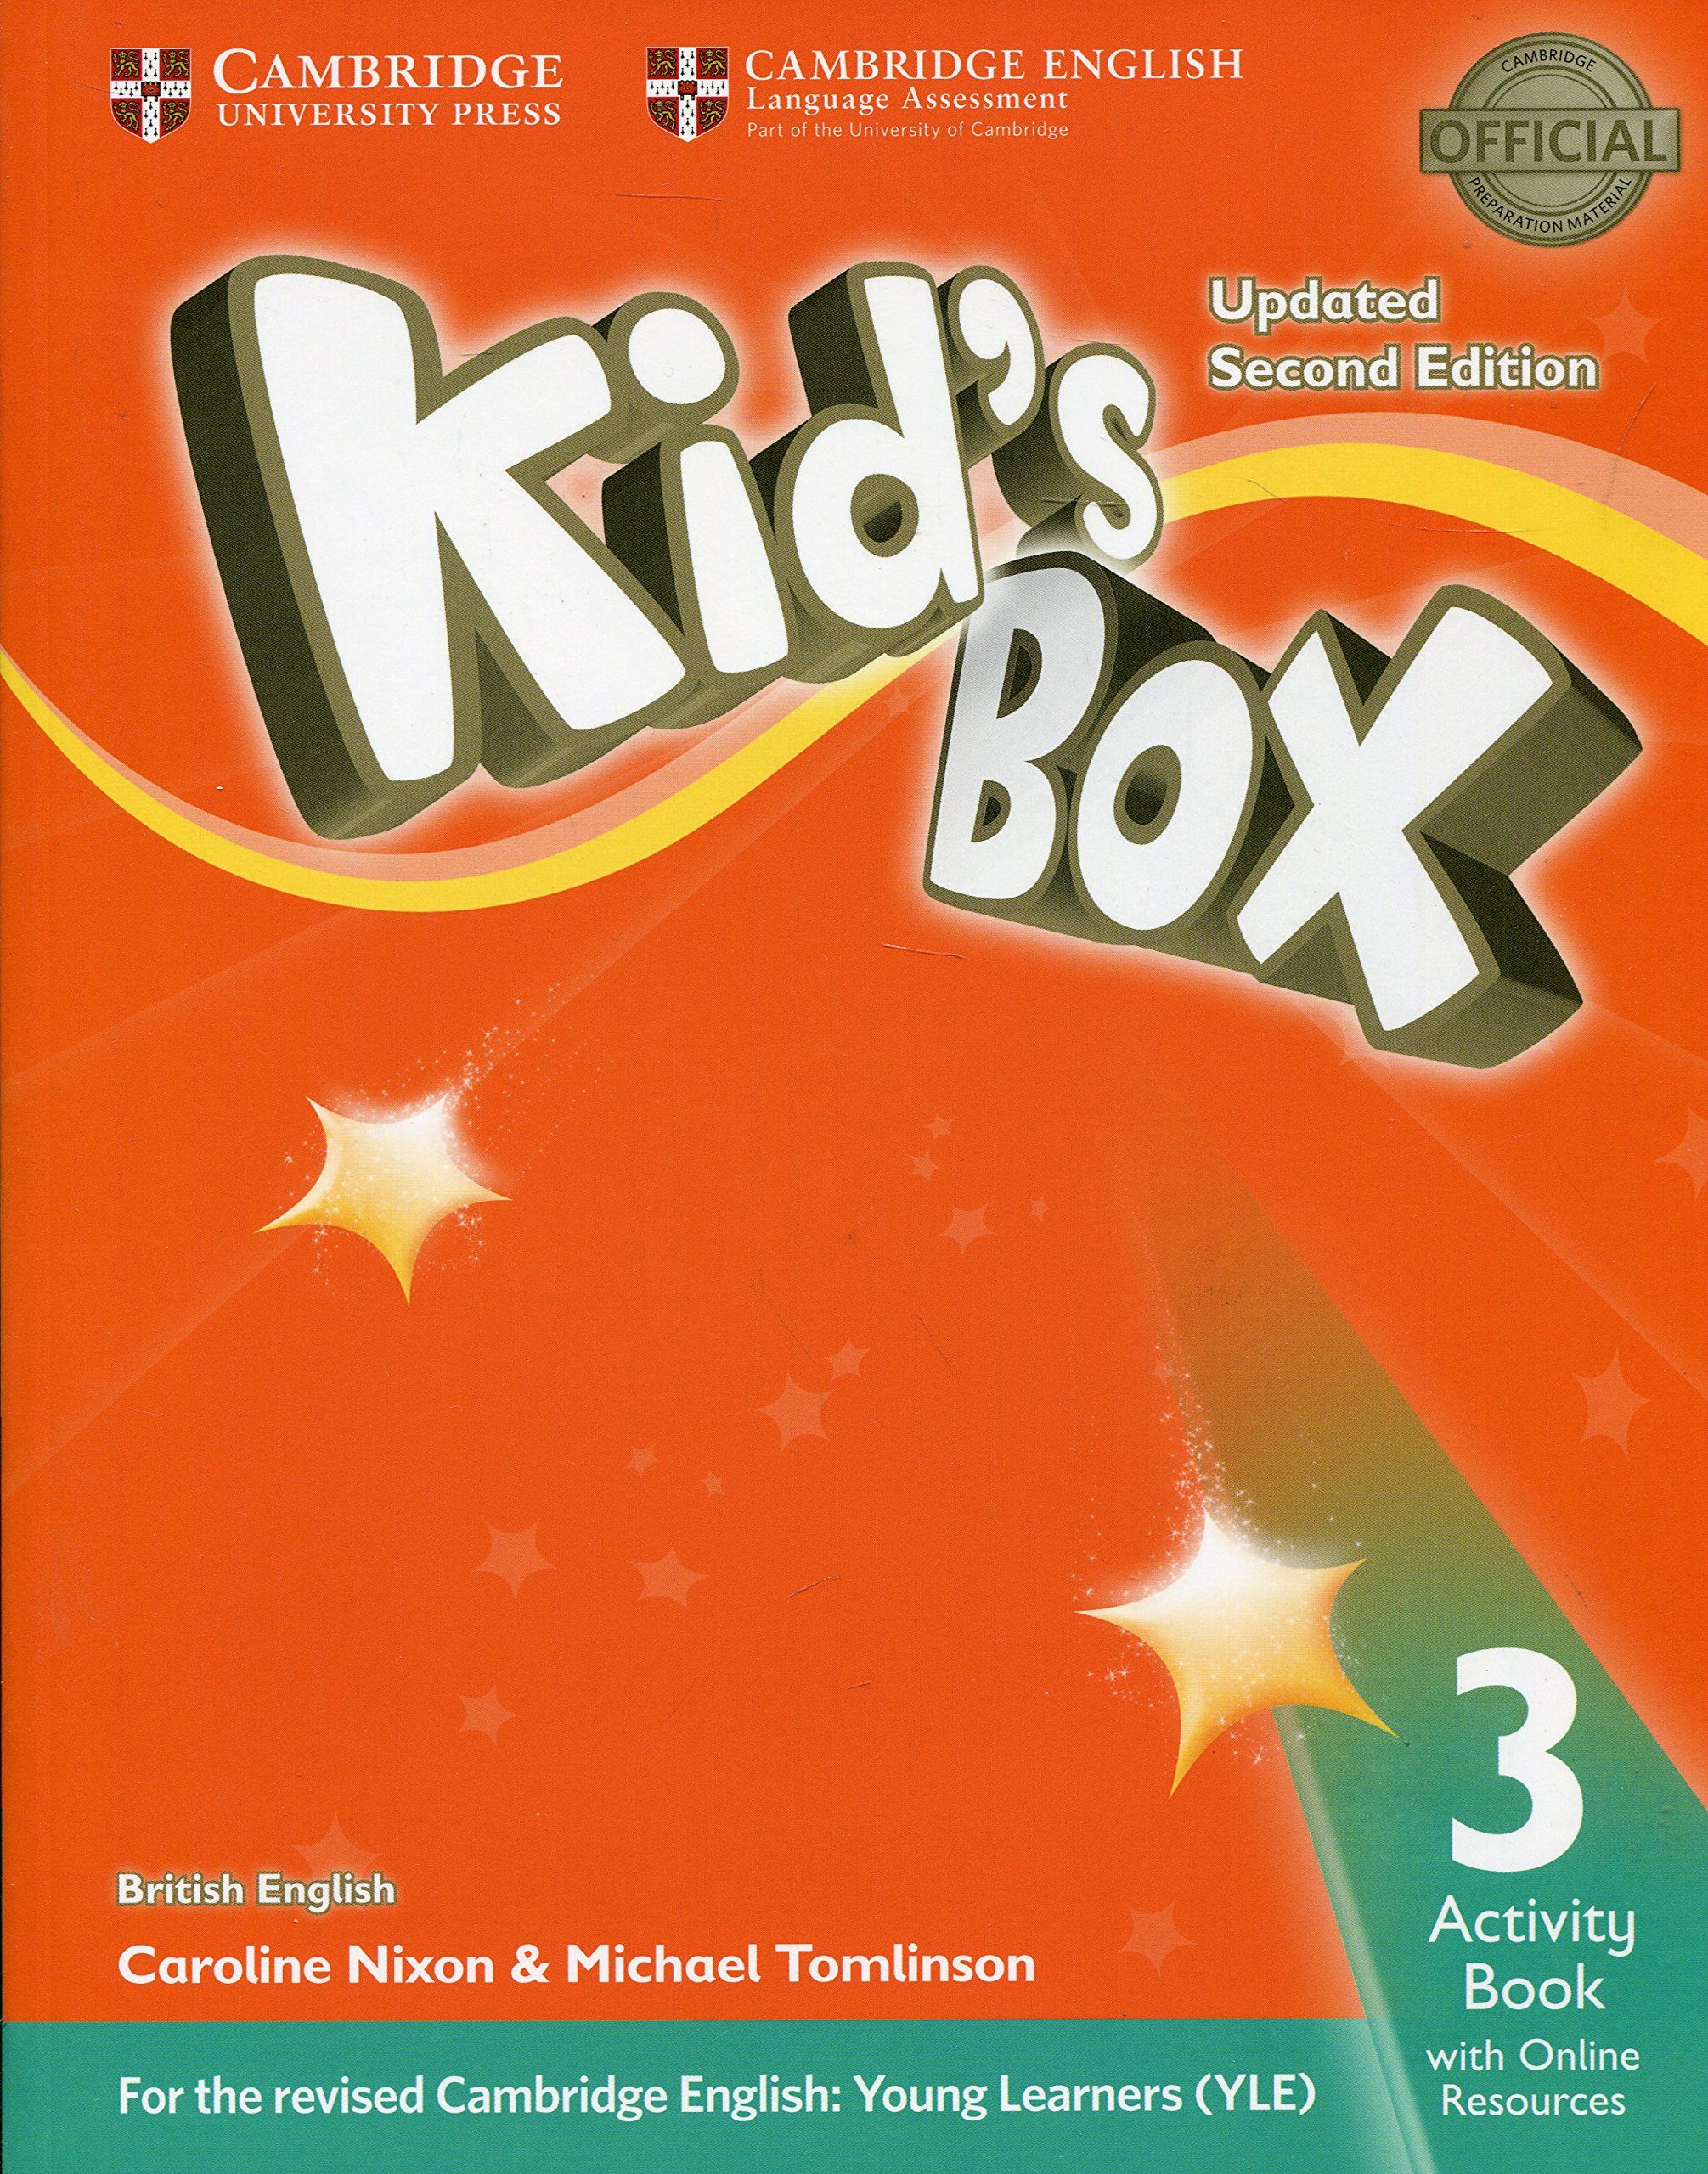 Kid's Box Level 3 Activity Book with Online Resources British English | Caroline Nixon, Michael Tomlinson